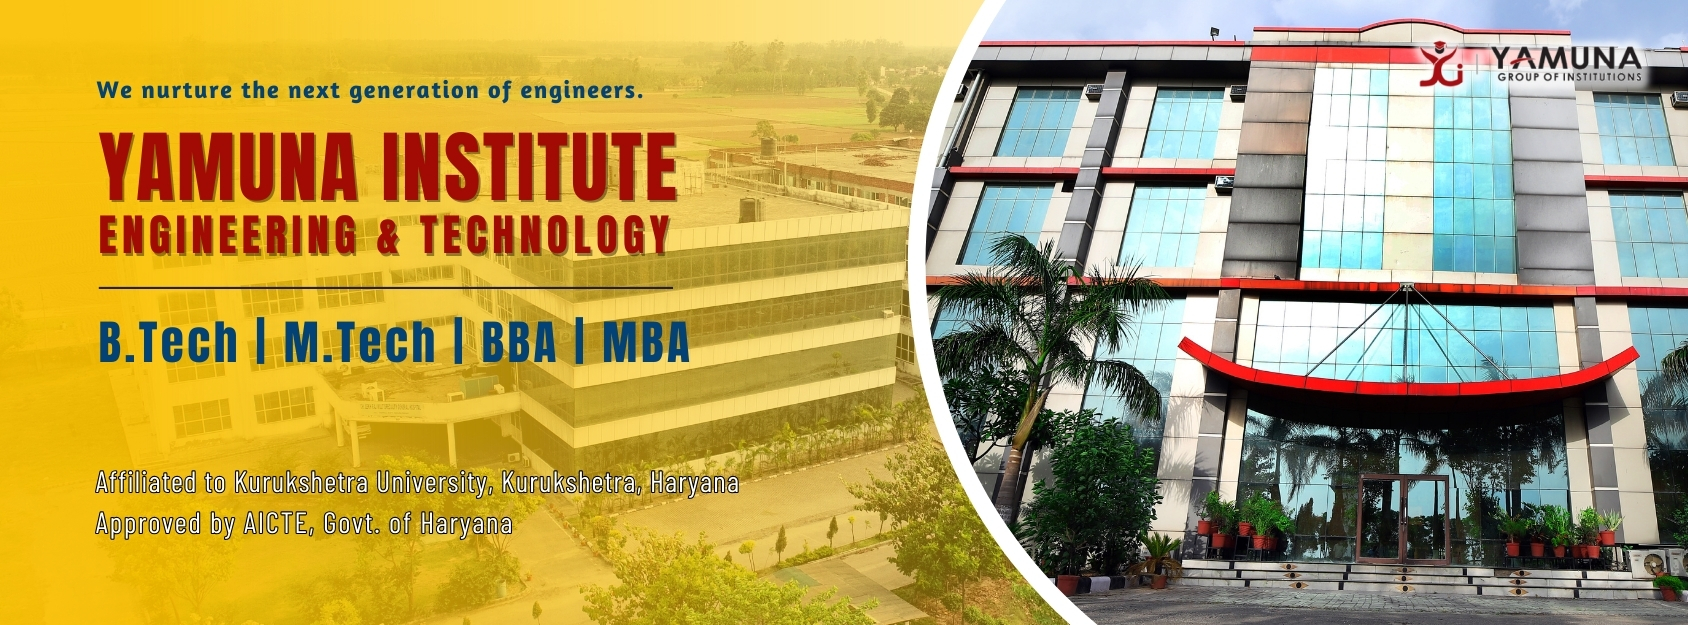 Yamuna Institute of Engineering & Technology